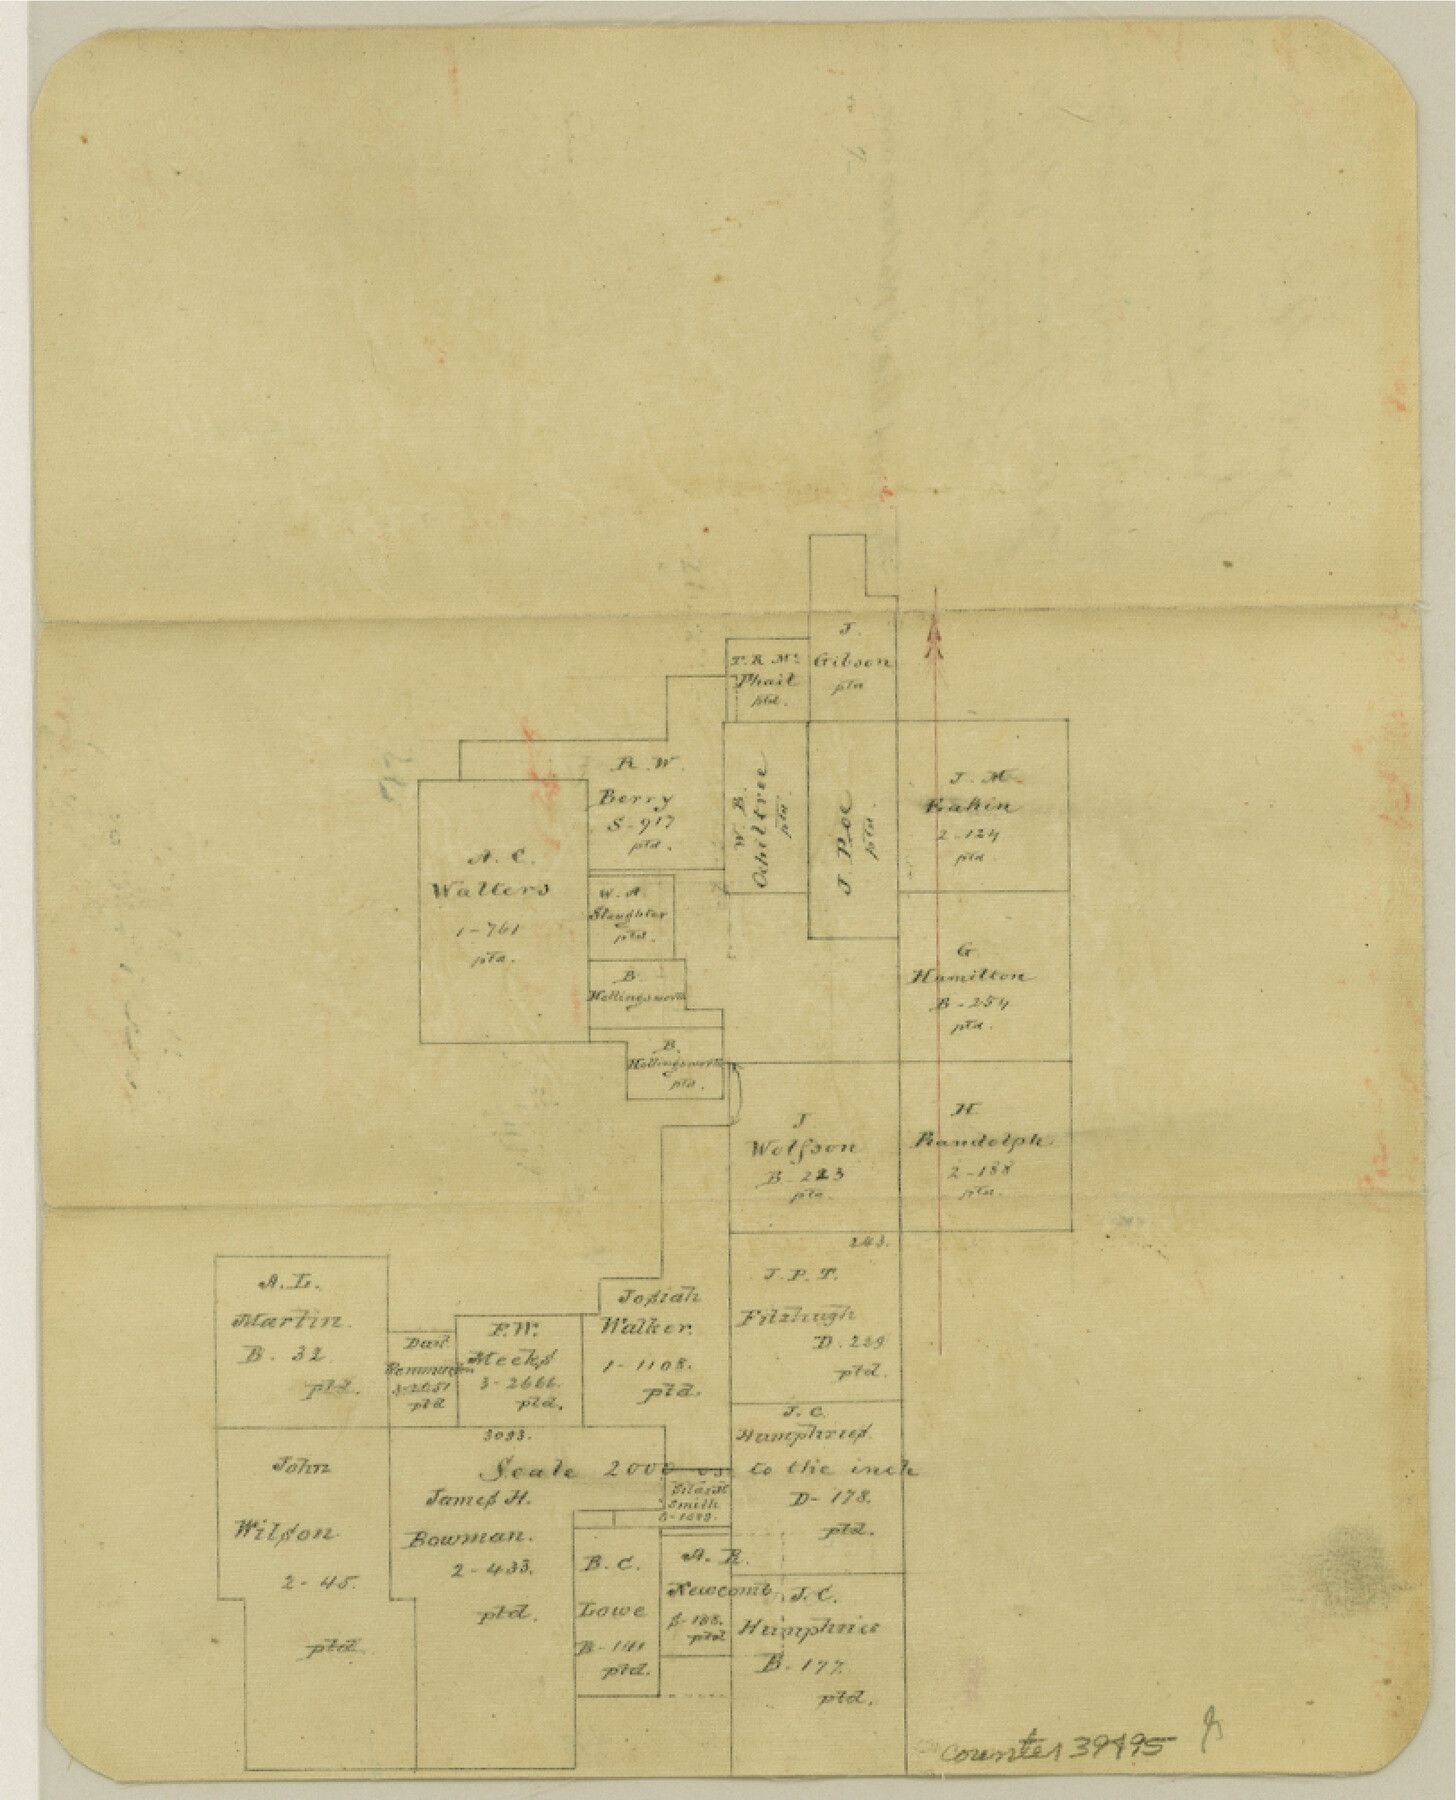 39495, Van Zandt County Sketch File 42, General Map Collection